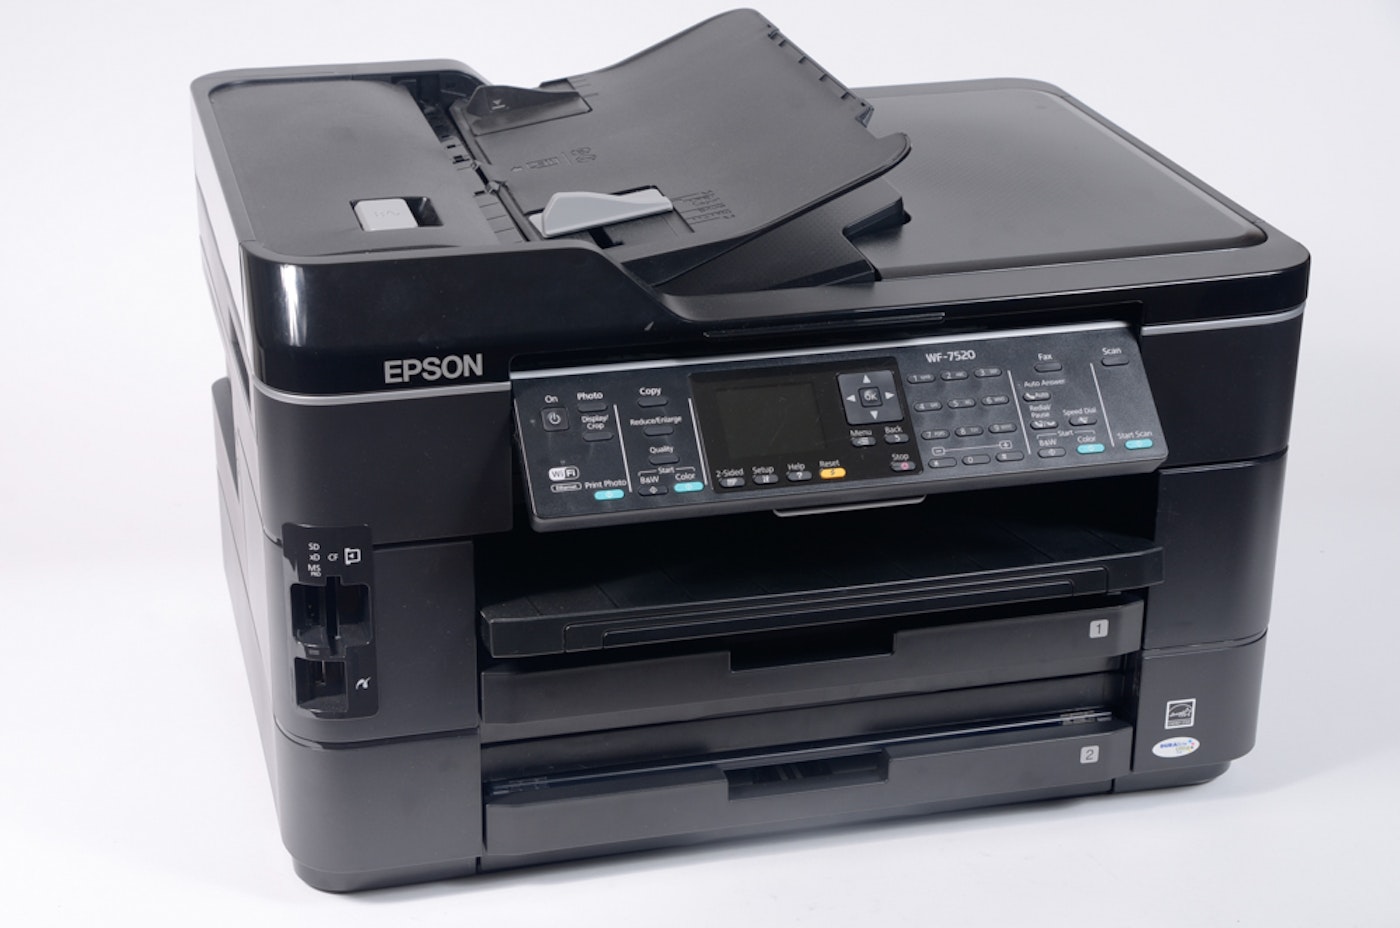 Epson Workforce Wf 7520 All In One Printer Ebth 2618